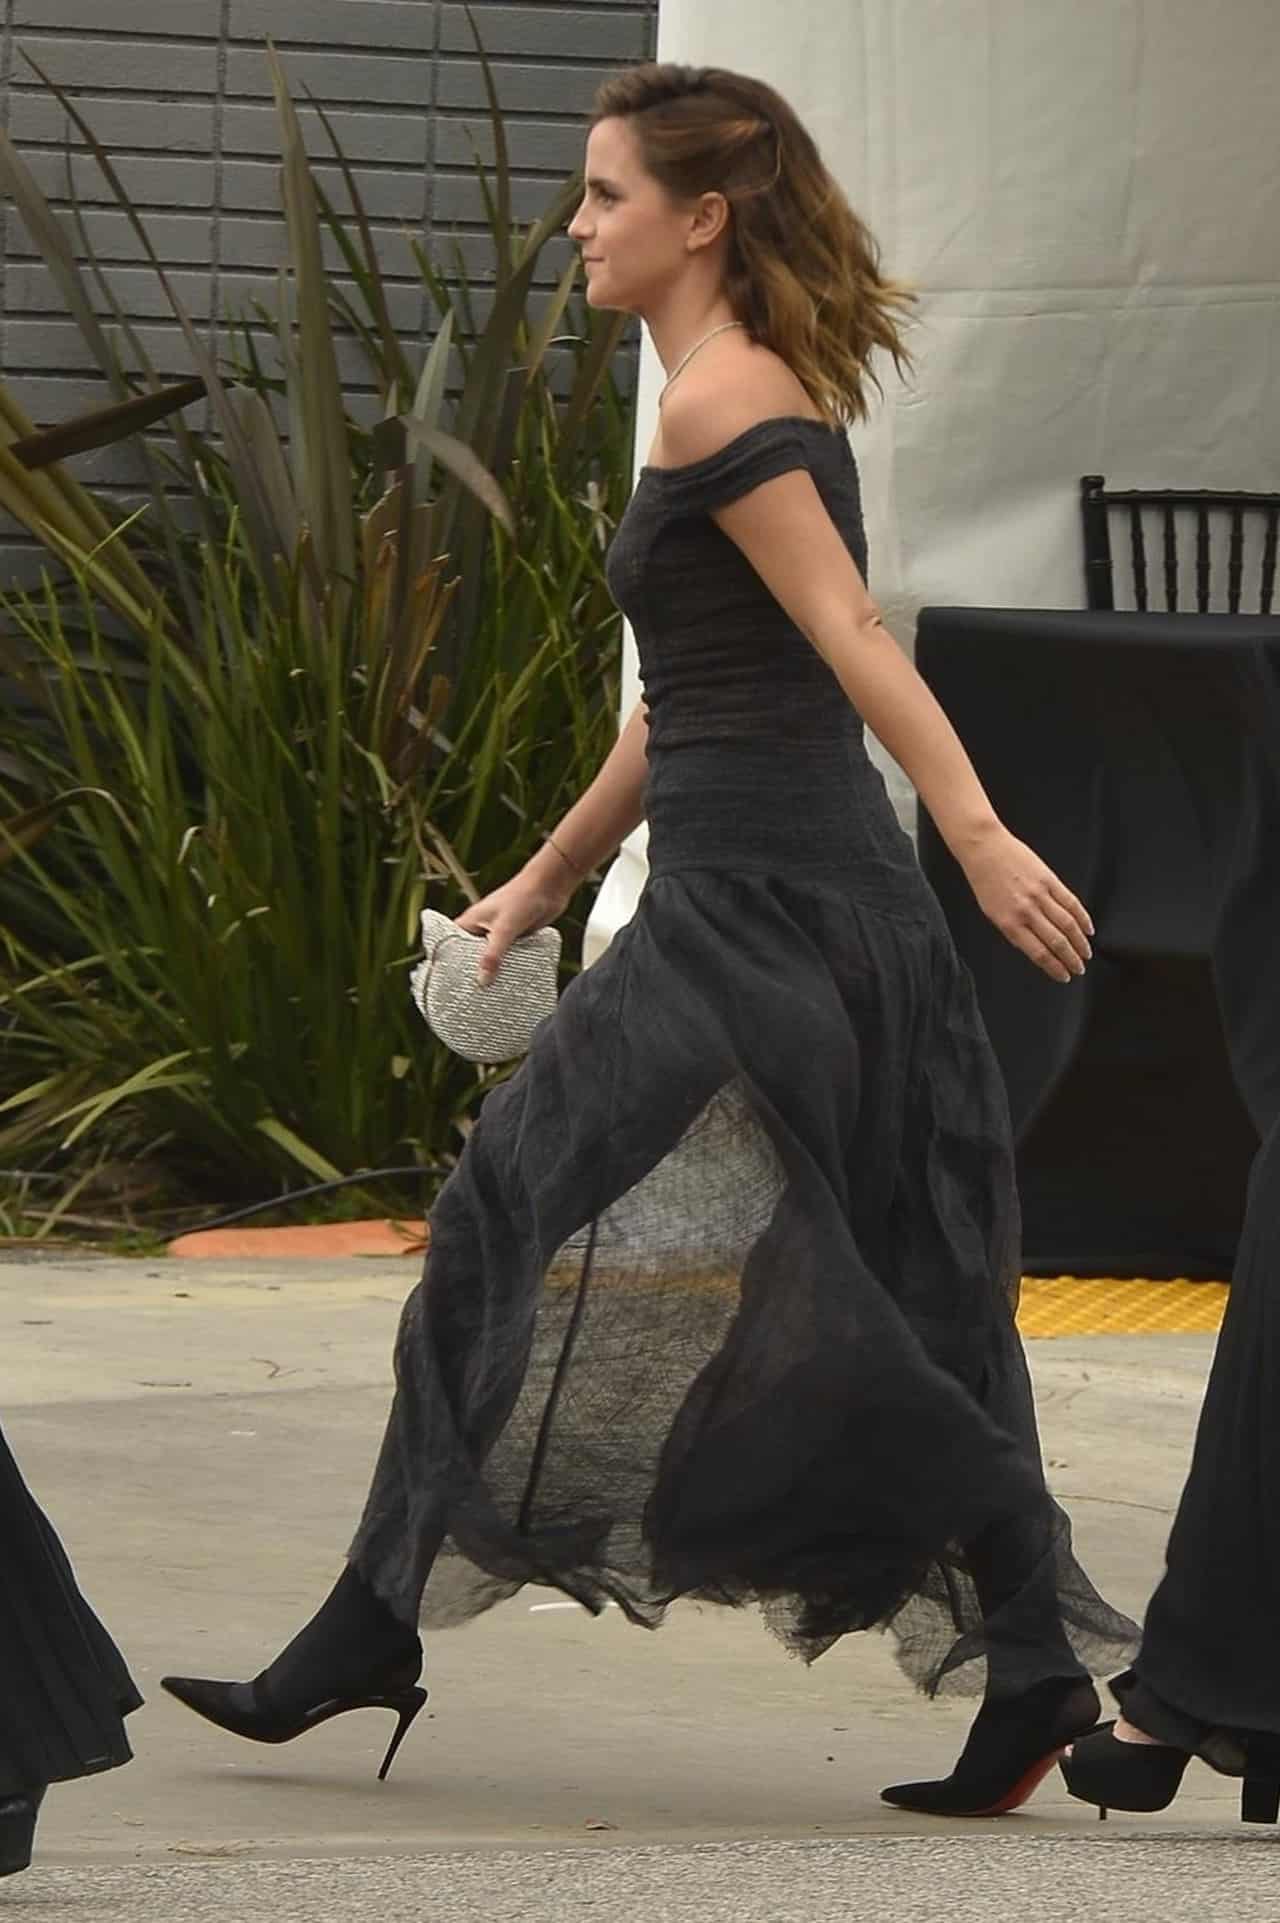 Emma Watson Looks Ethereal in a Sheer Dress Outside the Four Seasons Hotel